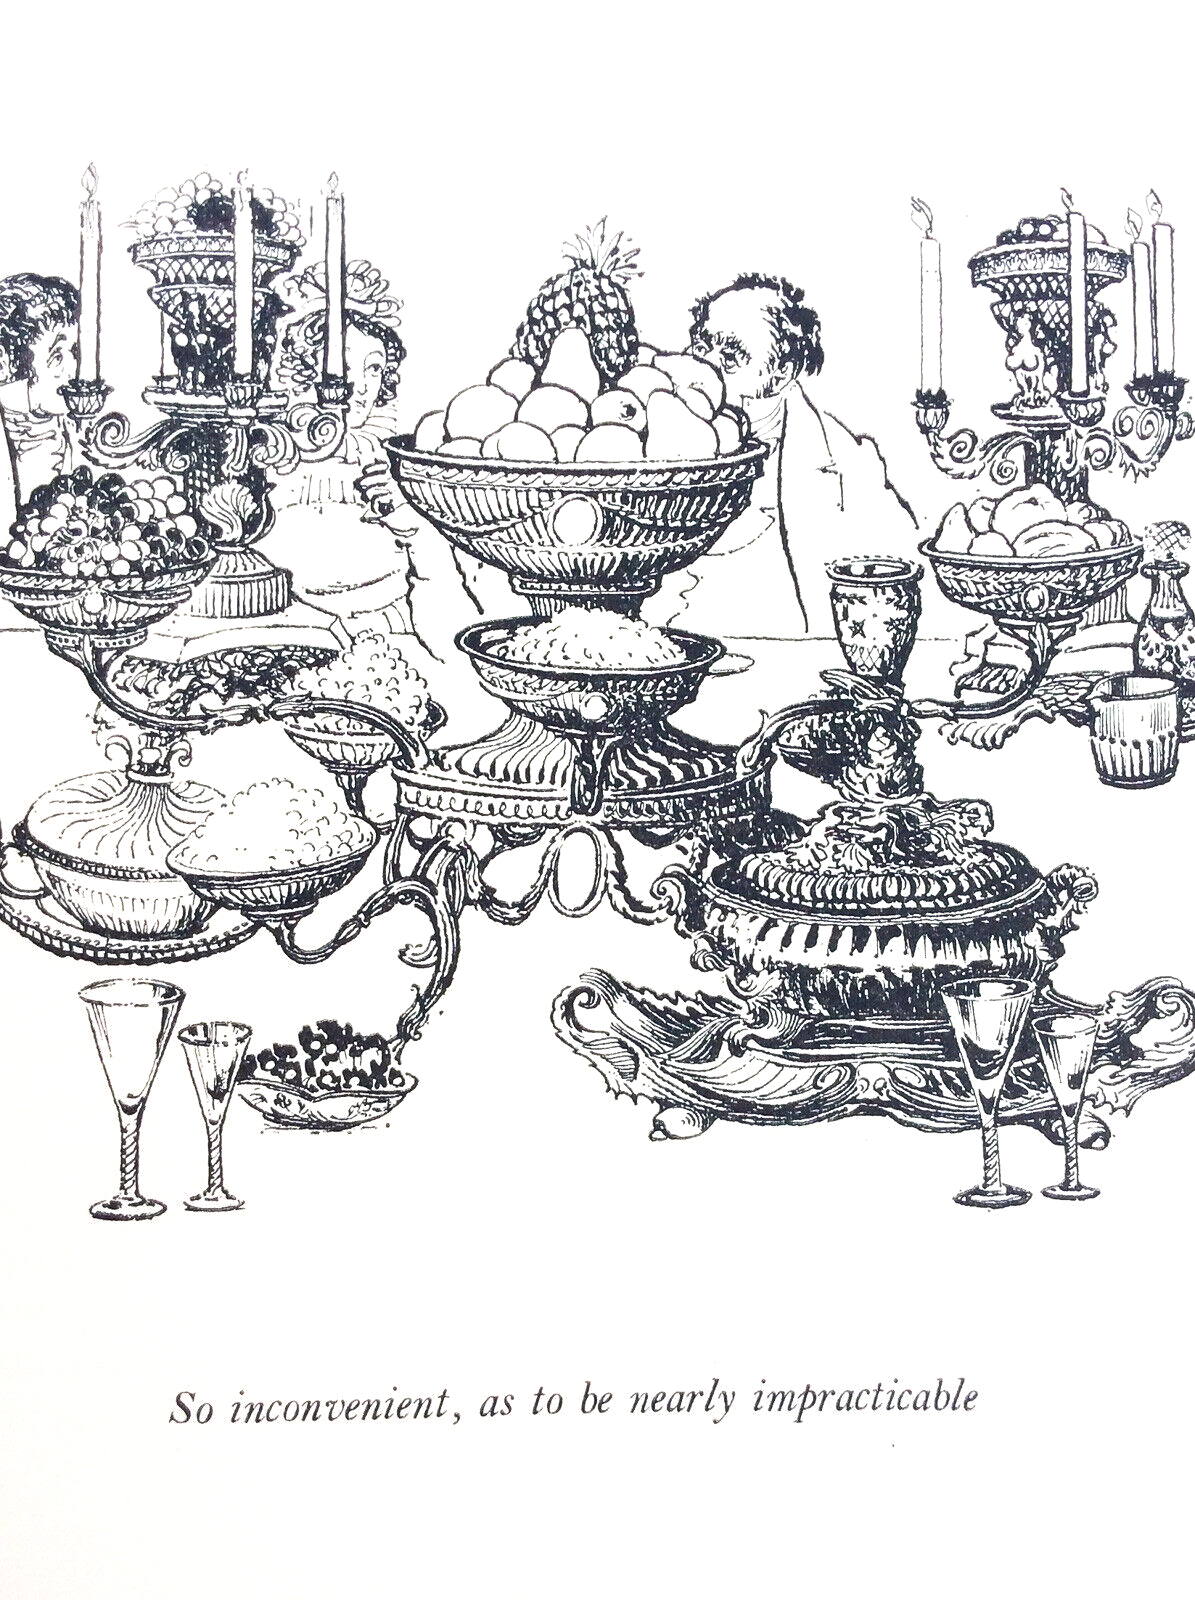 Victorian Book on the Art of Dining "Aristology" Cambridge Reprint 1965 Ltd Ed 500